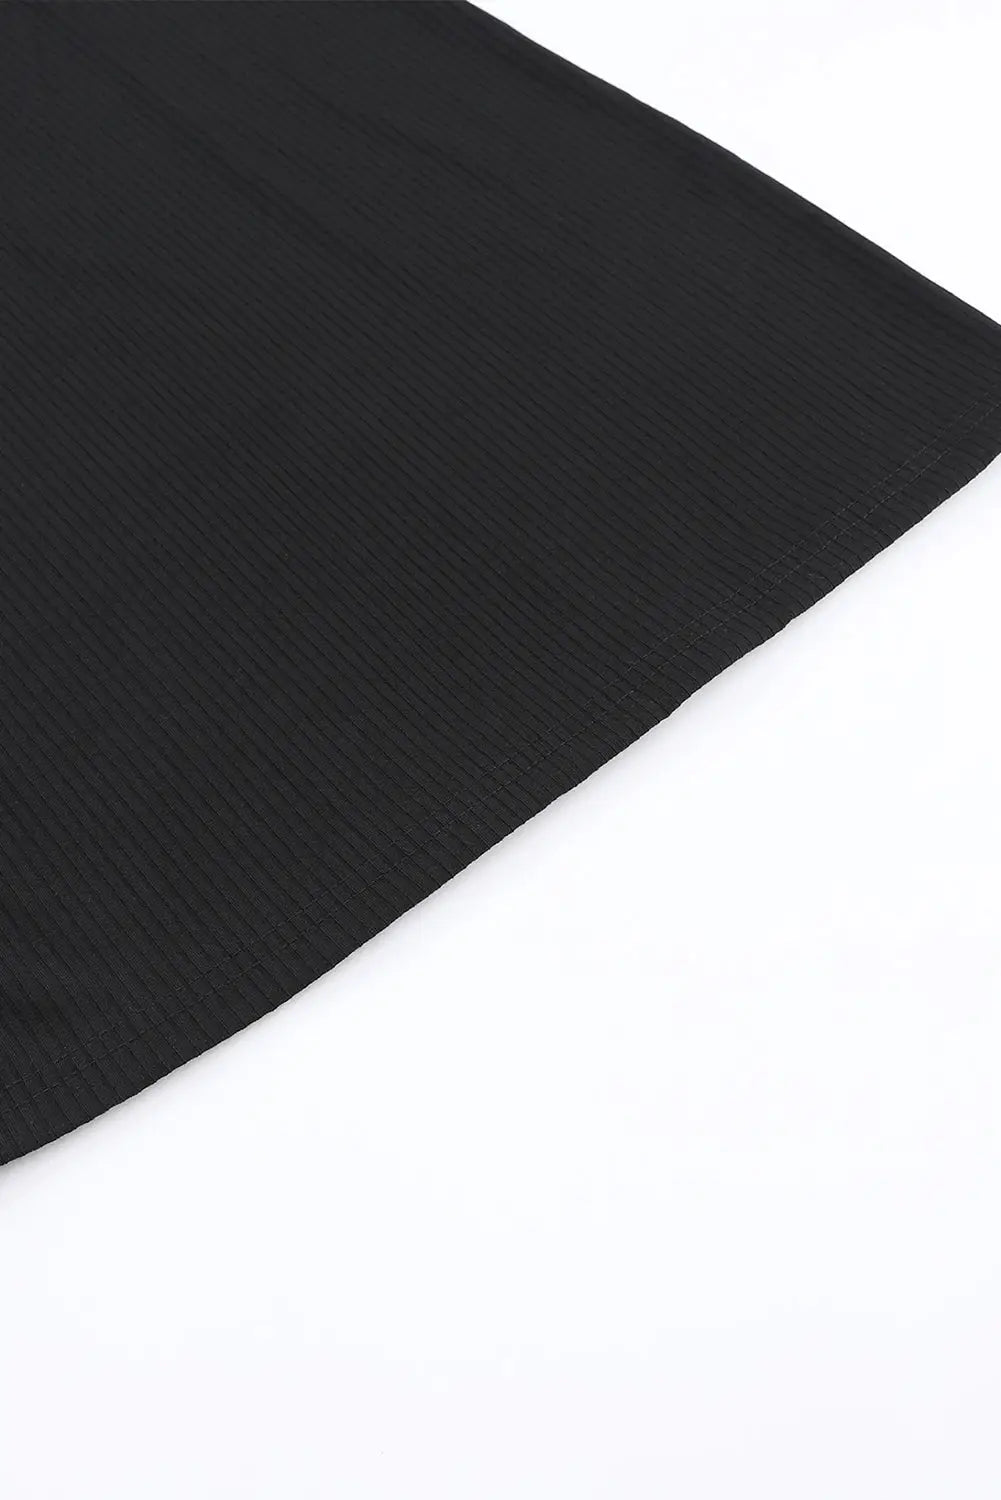 Black solid color ribbed crop top long pants set -